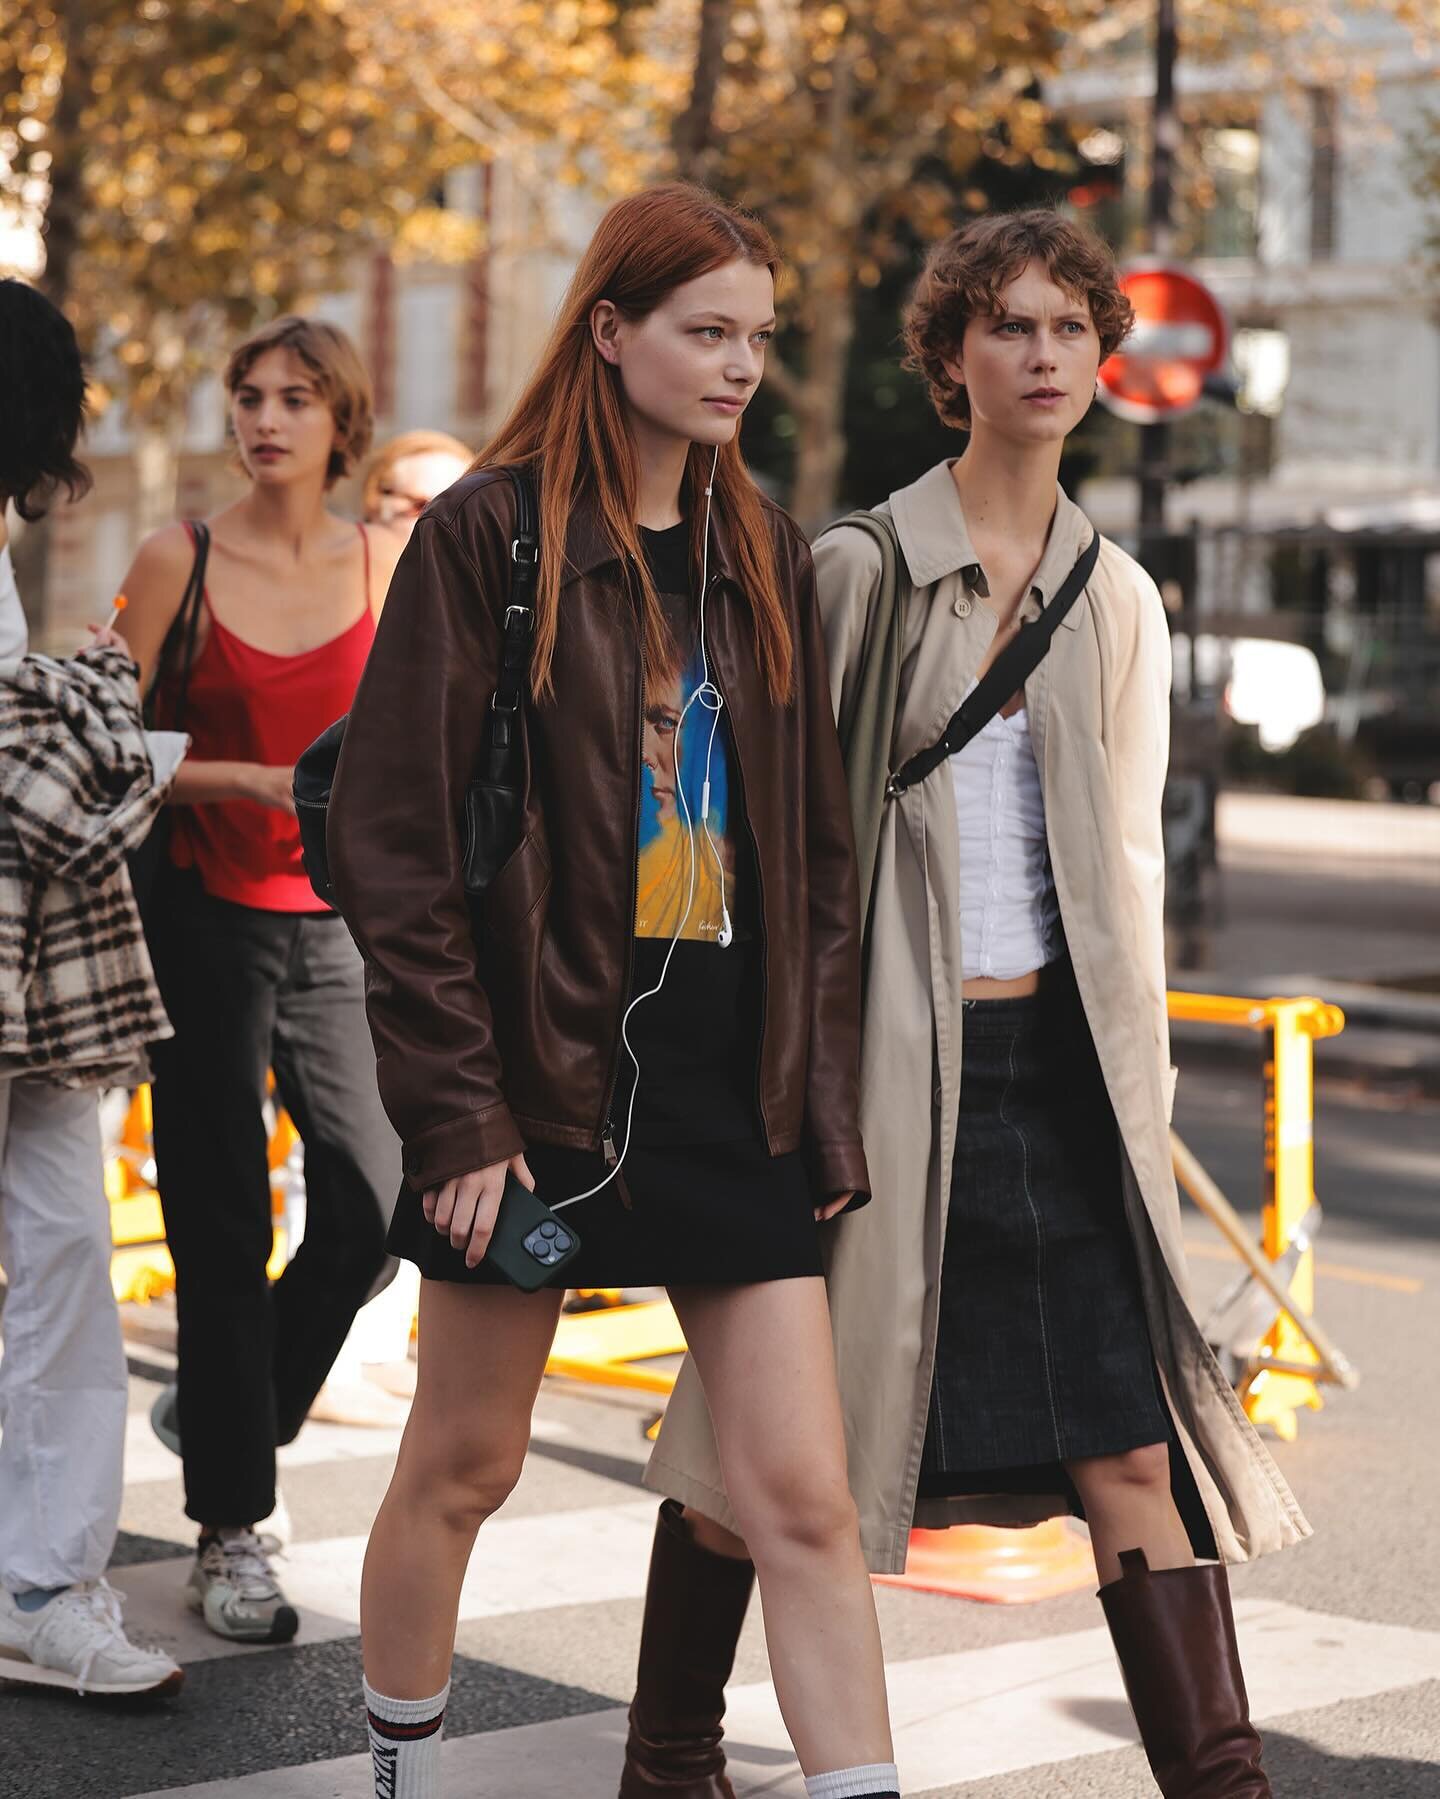 On the streets of Paris with models @juliehoomans &amp; @louise.robert during Paris Fashionweek - photos by @benjaminkwanphoto 
:
:
:
:
:
#parisfashionweek #streetstyle #paris #pfw #fw #juliehoomans #louiserobert #fashionmodels #streetfashion #modelo